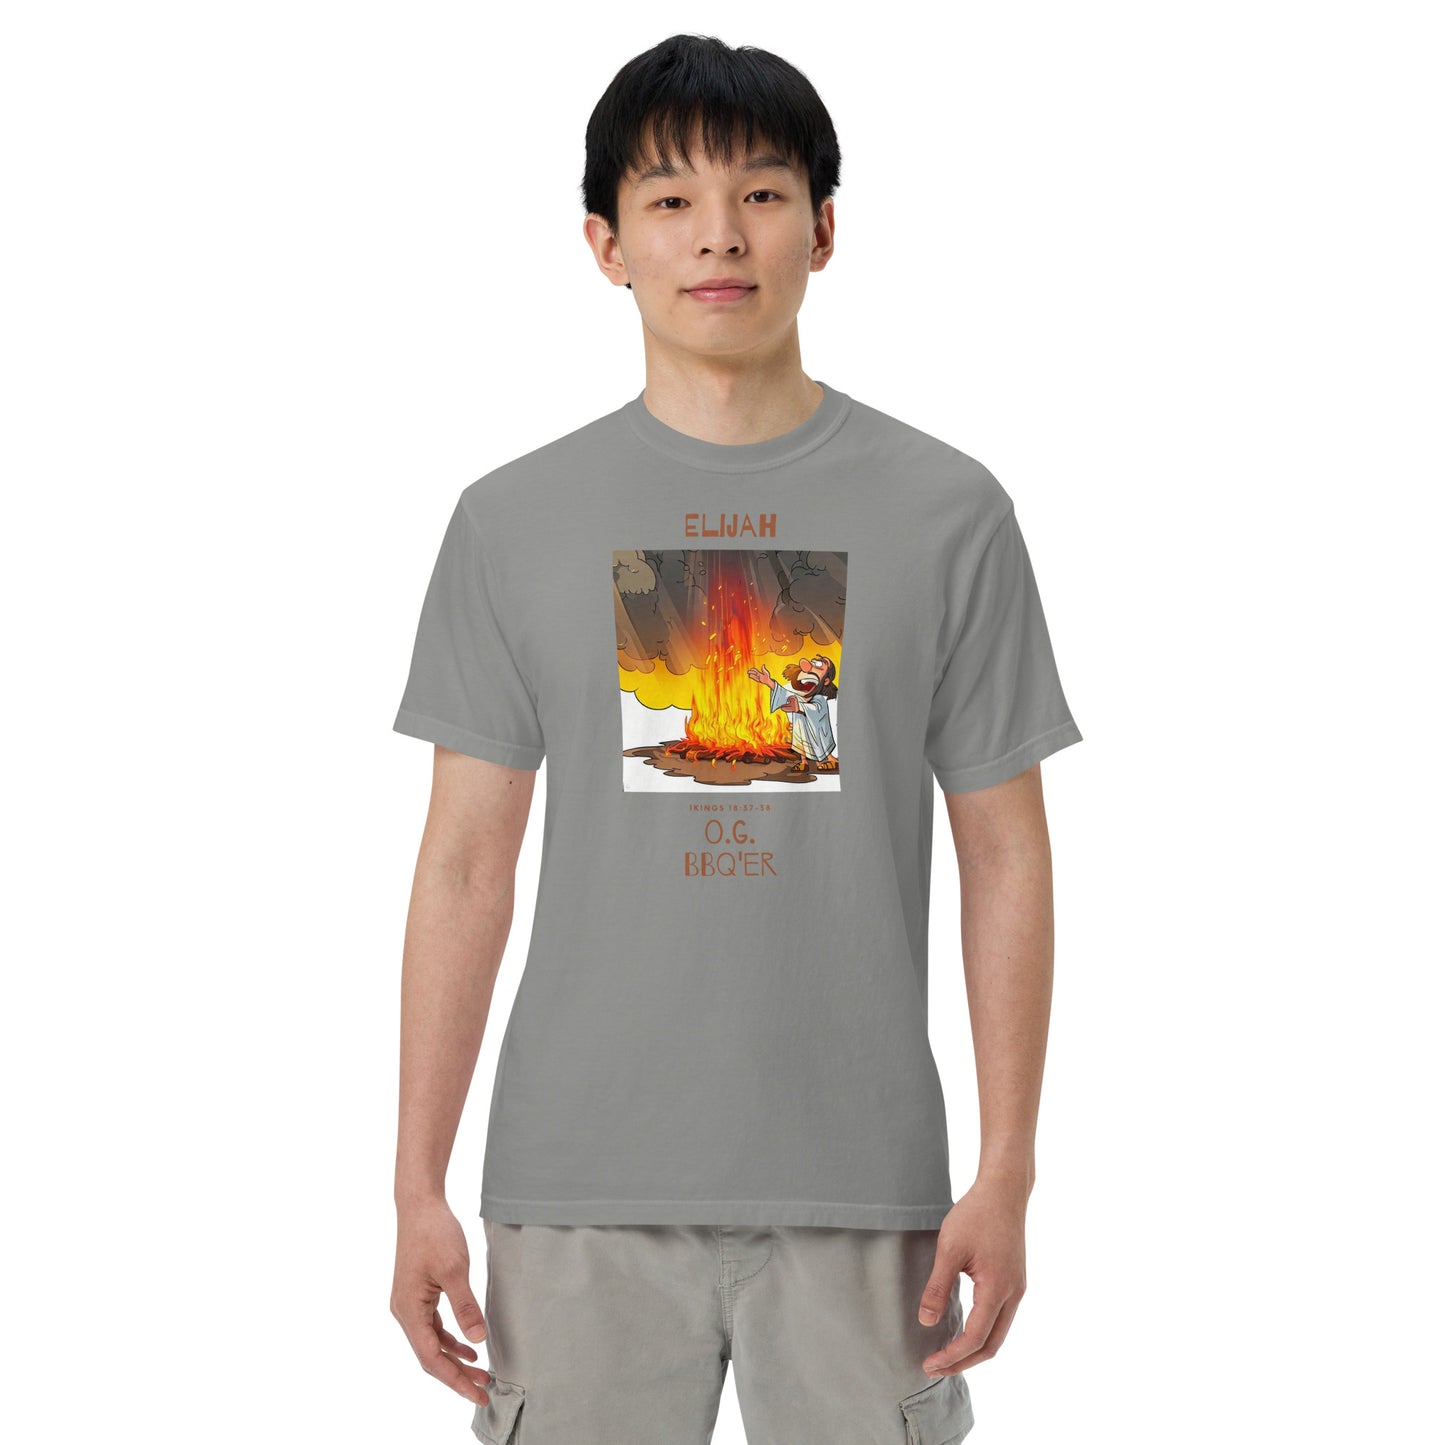 Elijah O.G. BBQ'er Men’s Comfort Colors T-Shirt